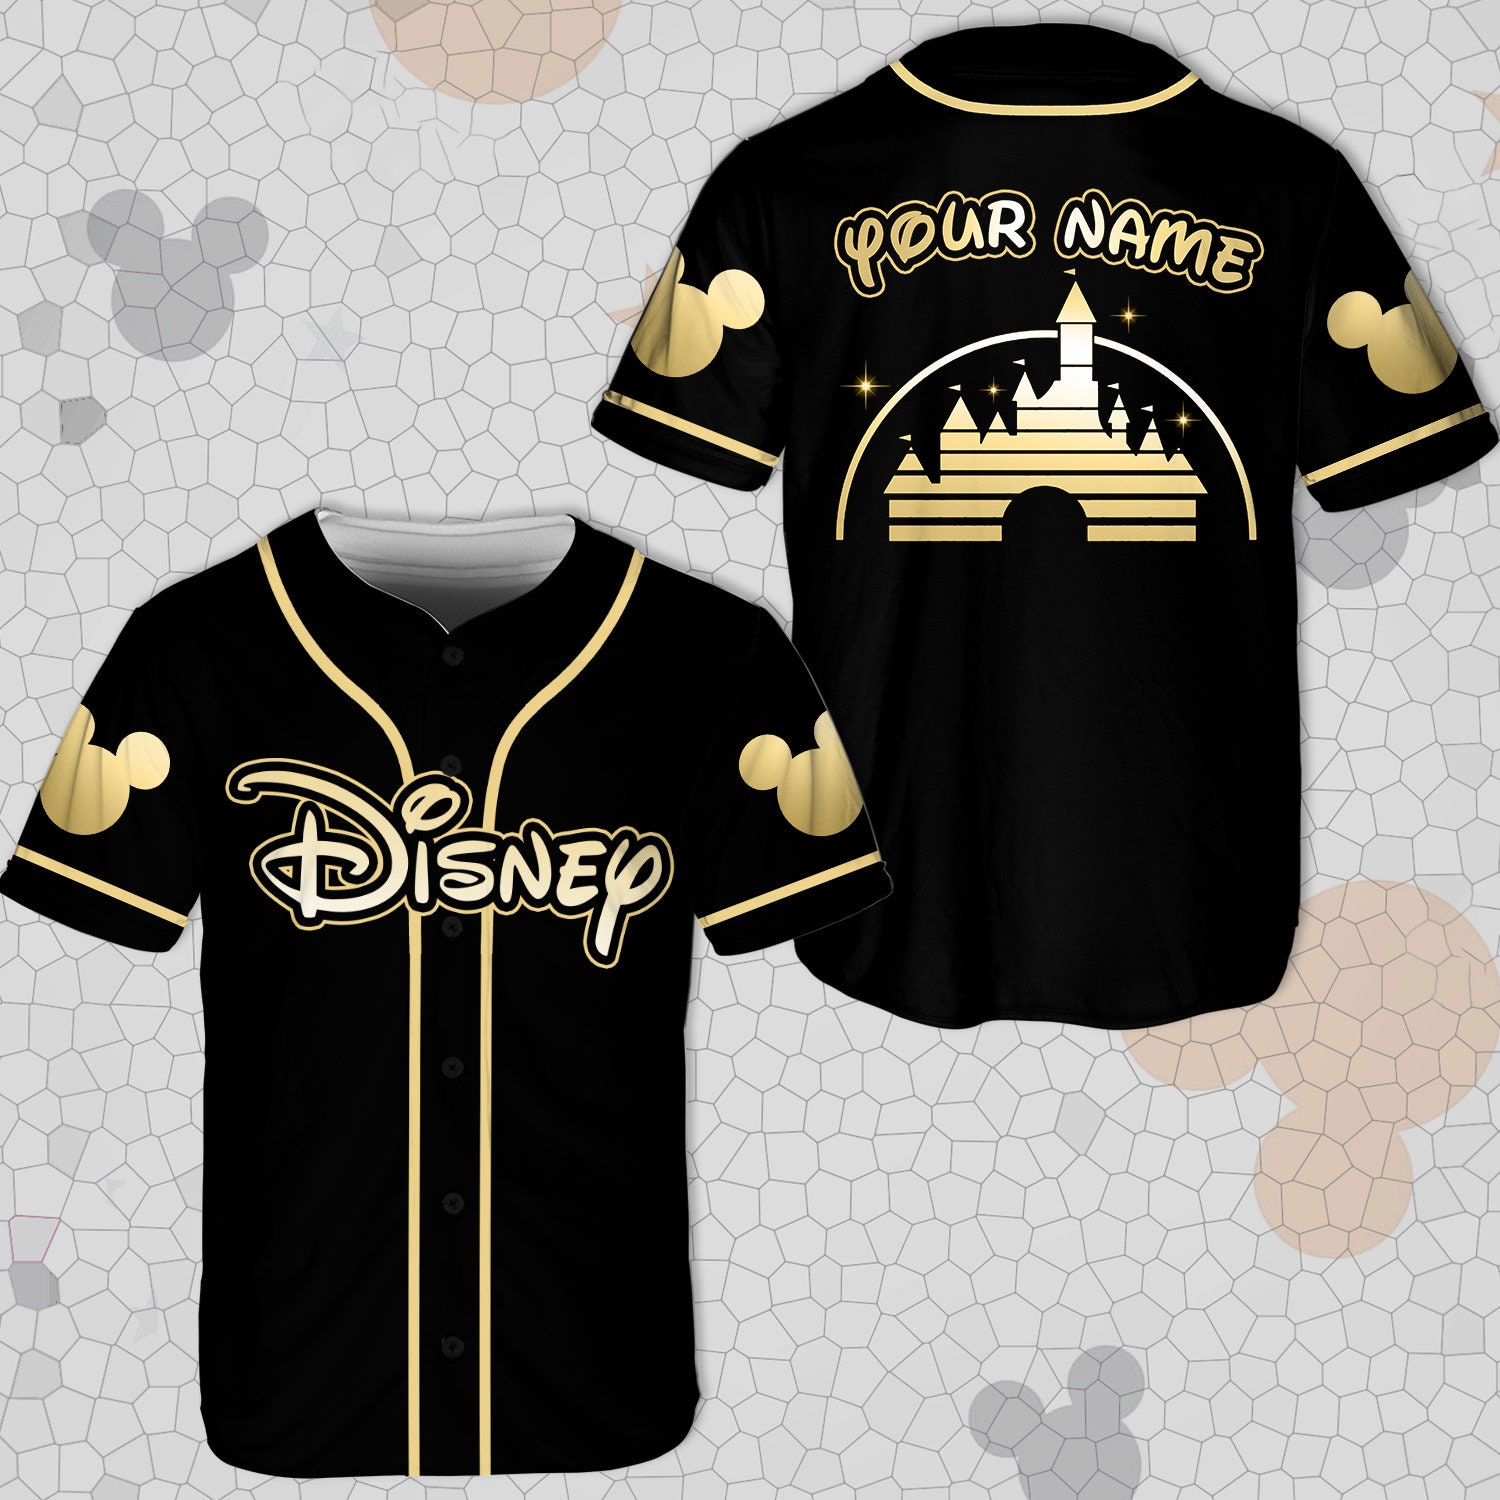 Personalized Disney Baseball Jersey, Custom Name Disneyland Baseball Jersey